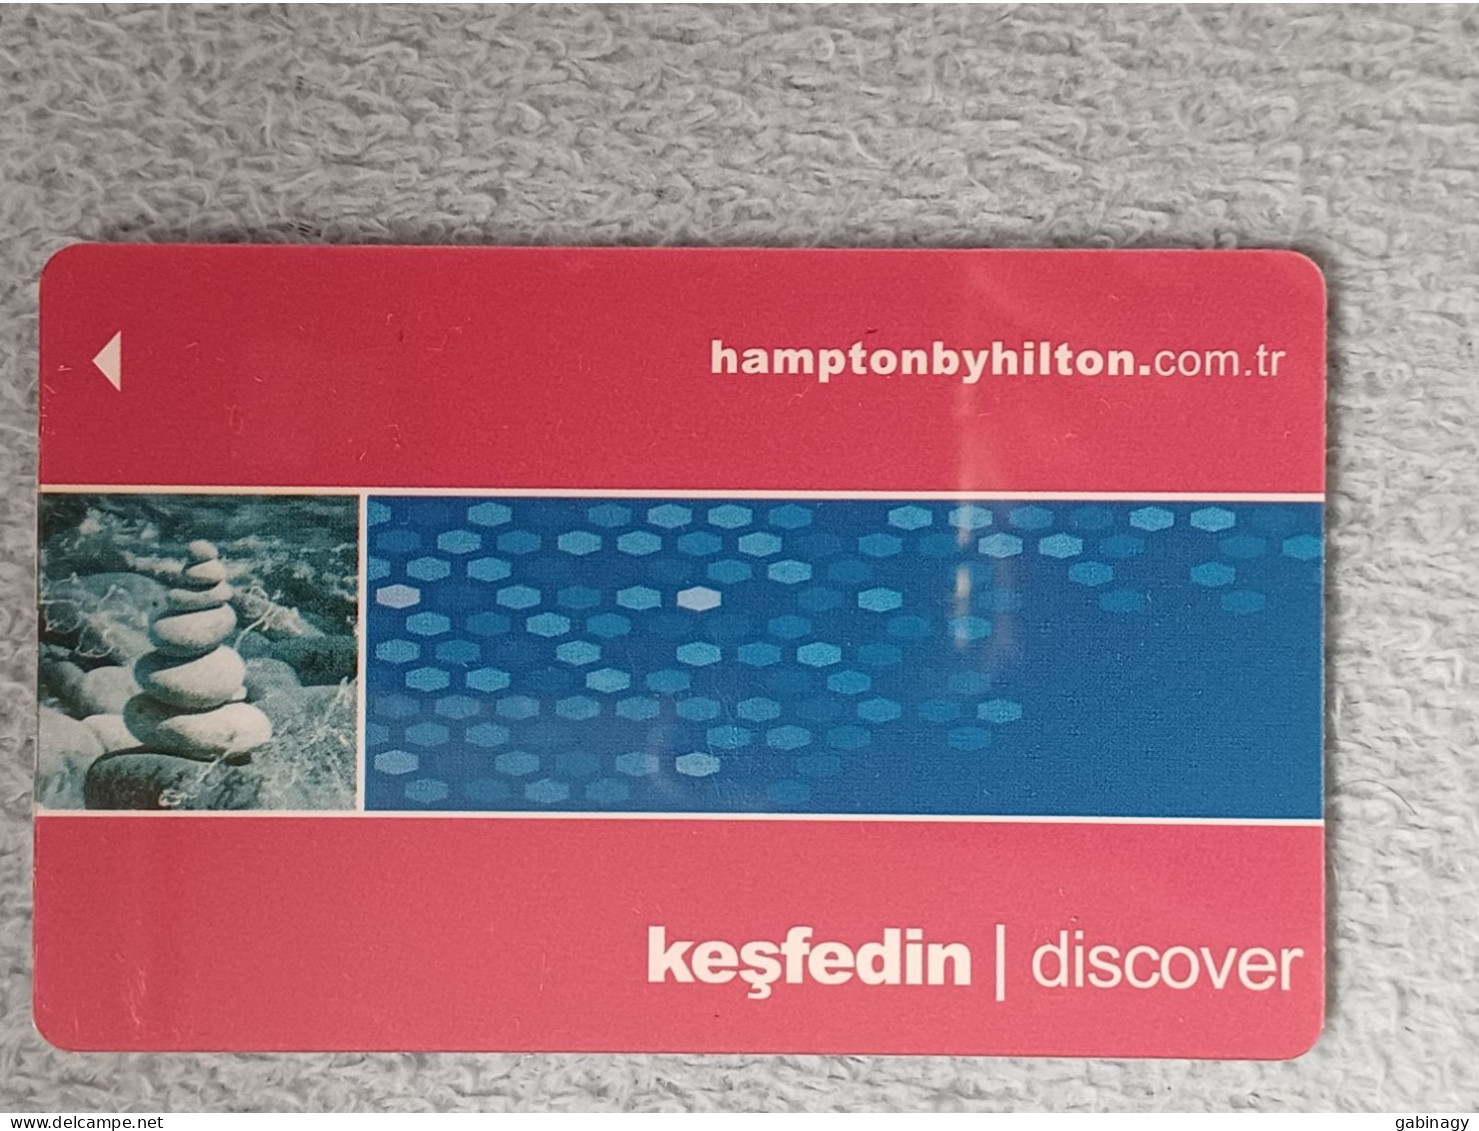 HOTEL KEYS - 2527 - TURKEY - HAMPTON BY HILTON DISCOVER - Cartes D'hotel